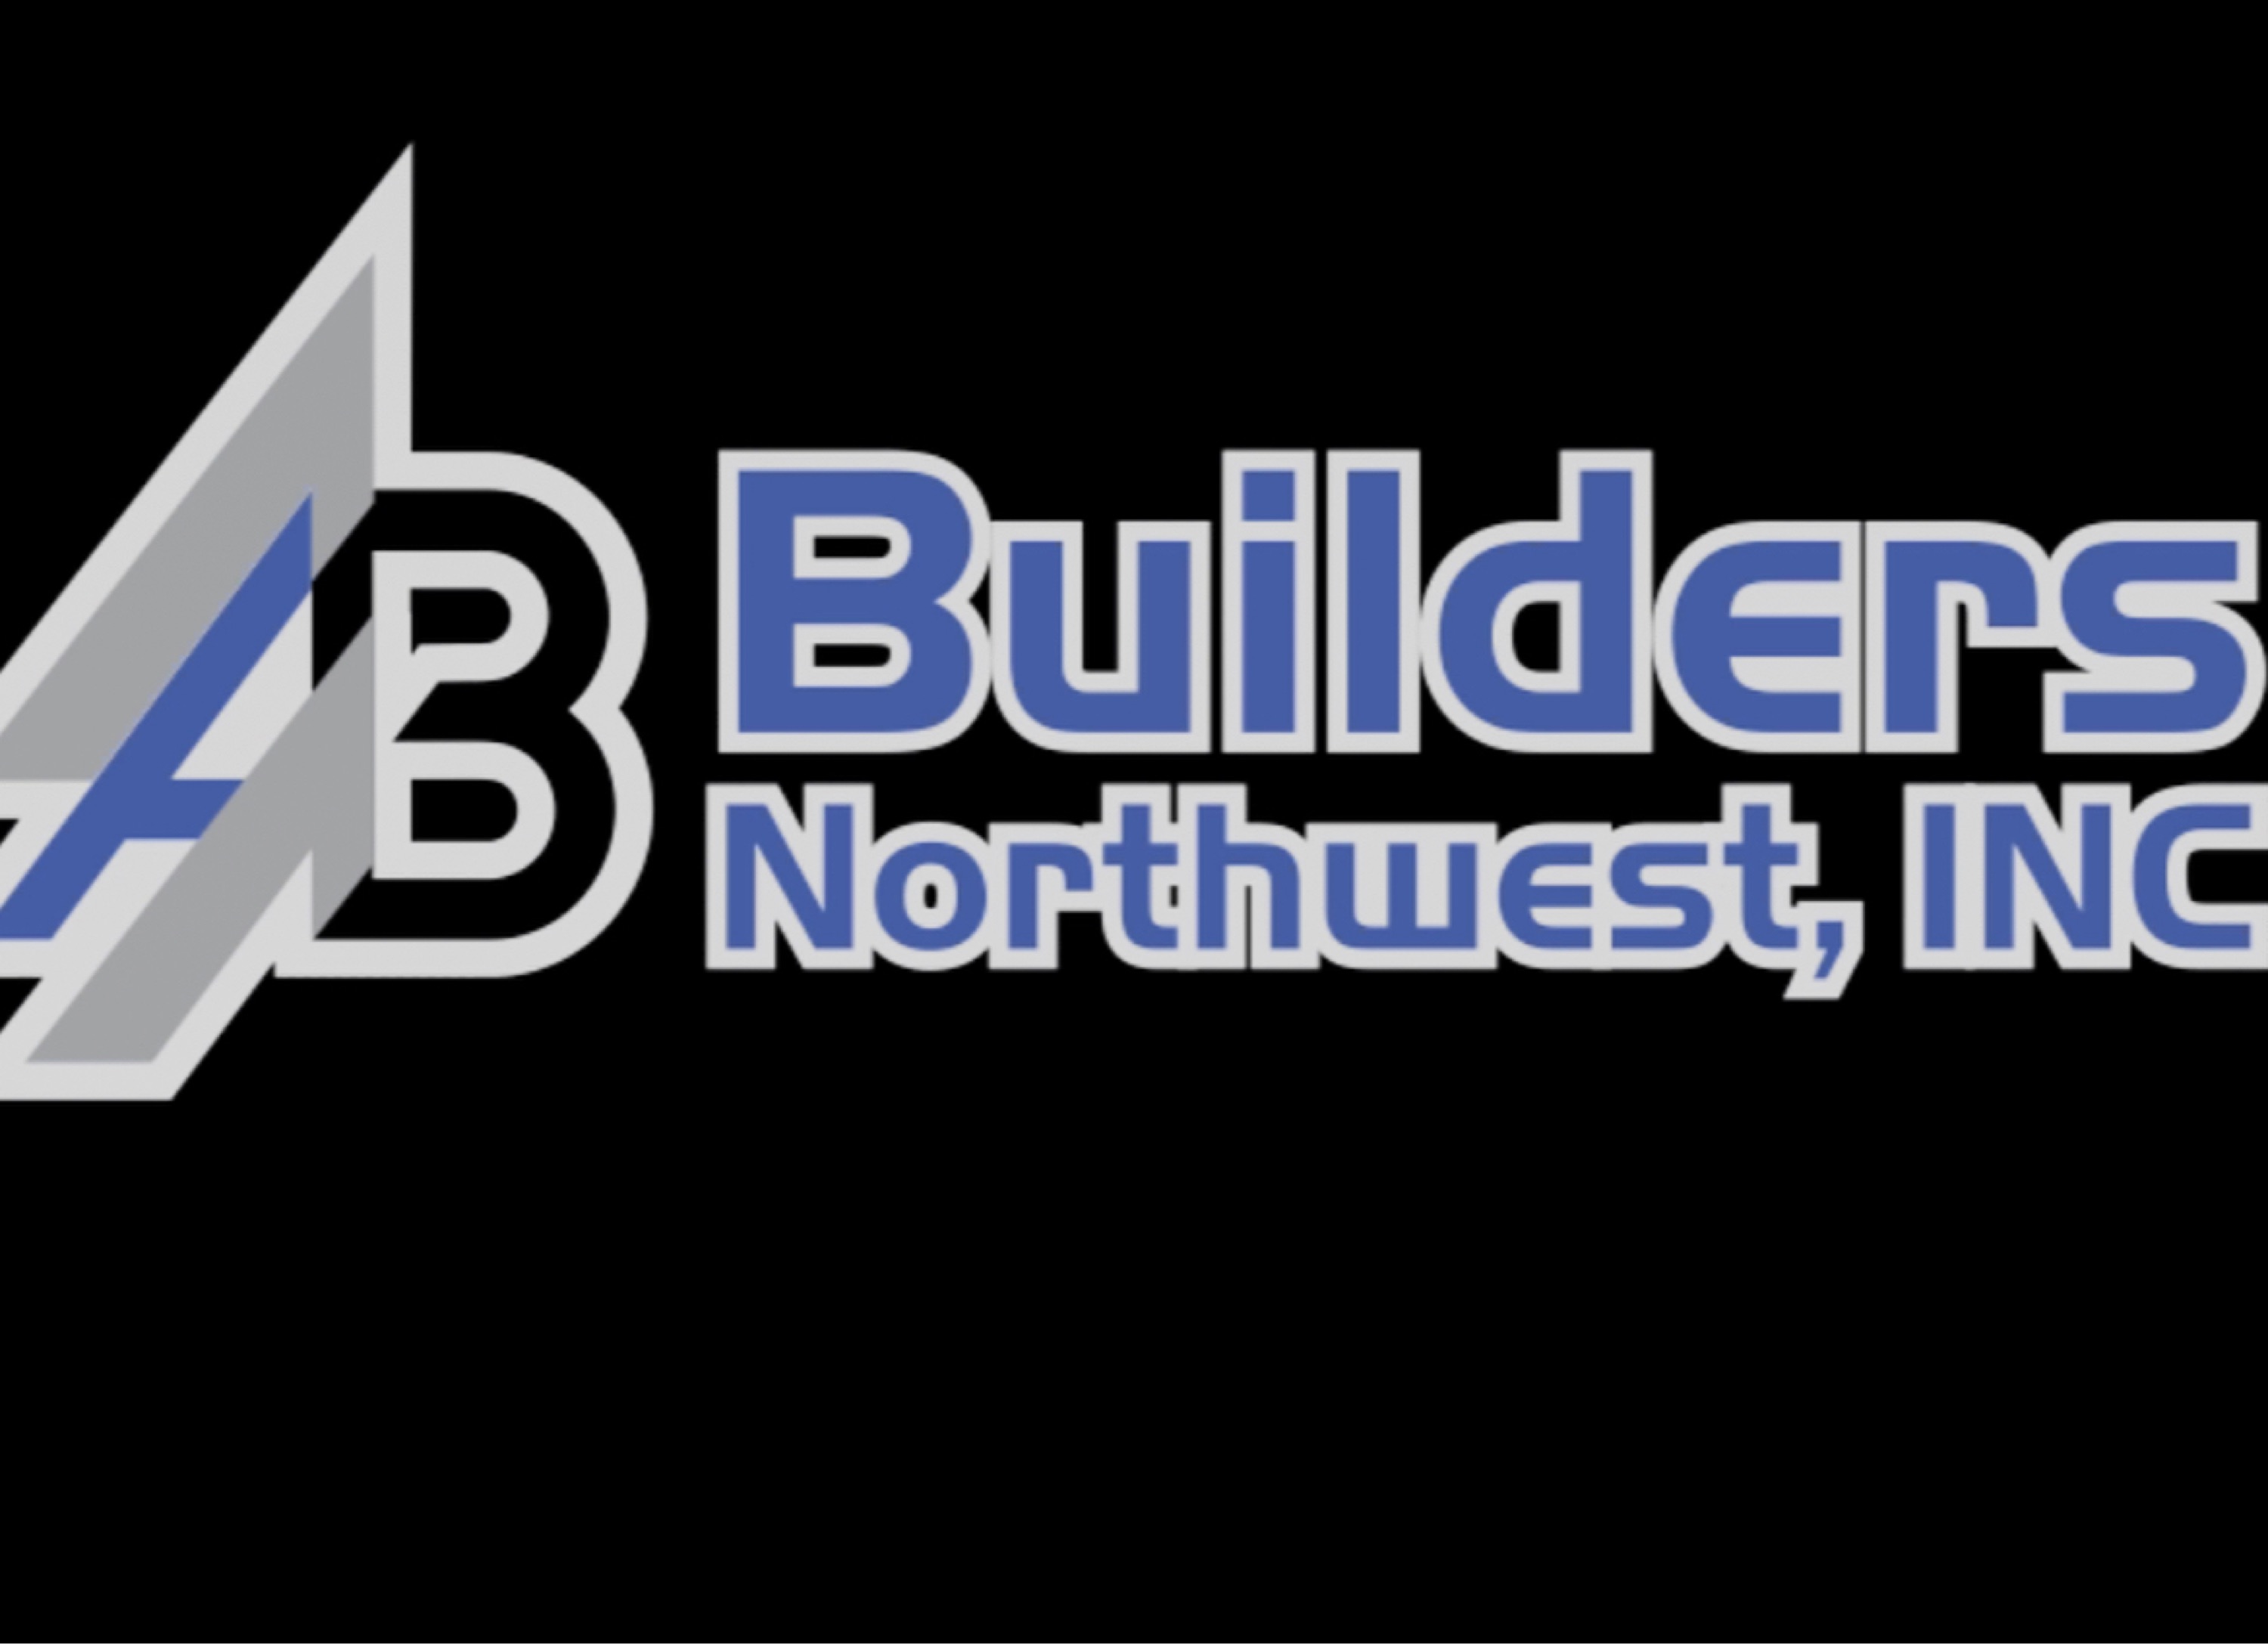 AB Builders Northwest, Inc. Logo